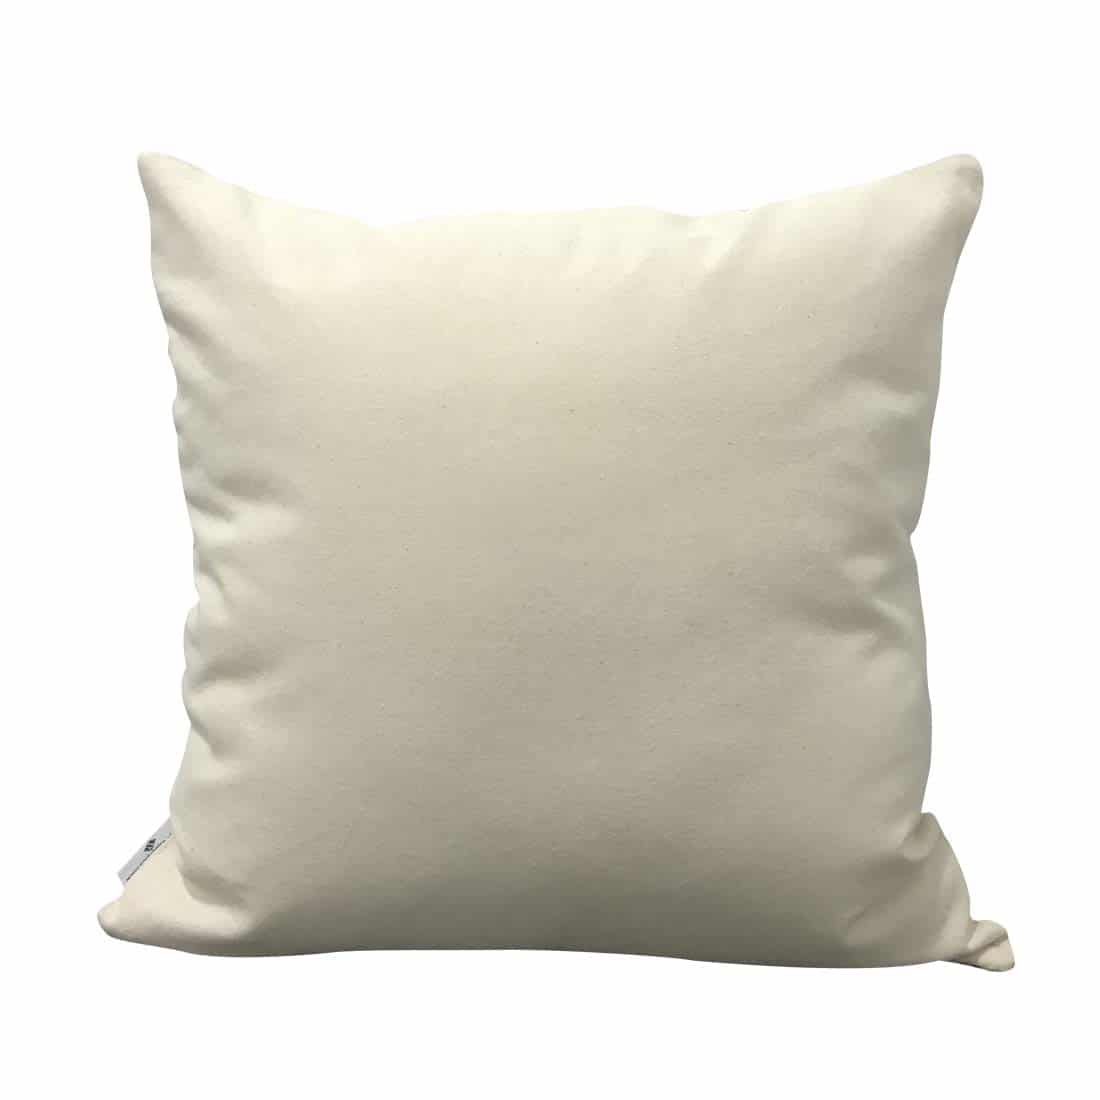 Decorative Hand Weaving Sofa Pillow Cushion Cover Green 16x16